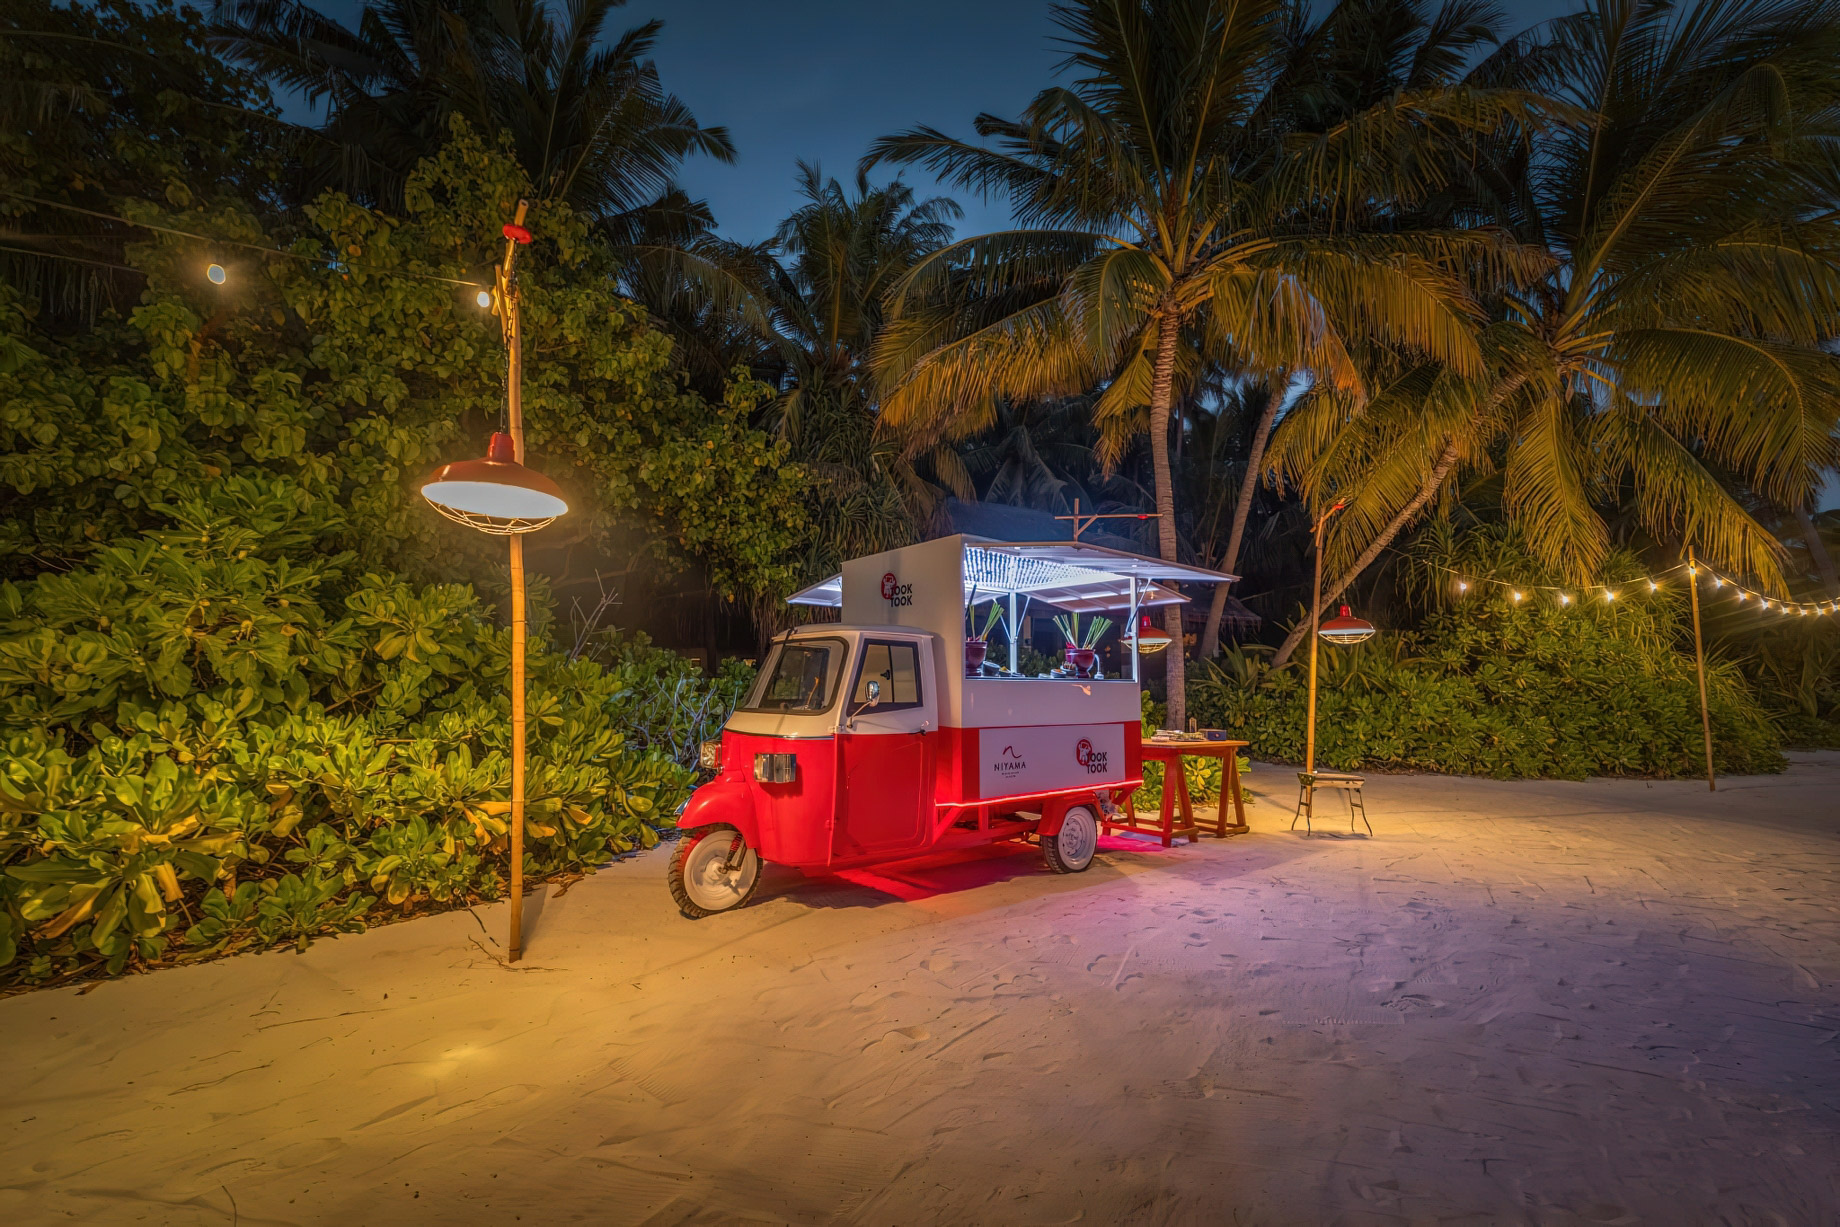 Niyama Private Islands Maldives Resort – Dhaalu Atoll, Maldives – Beach Dining Food Truck Night View